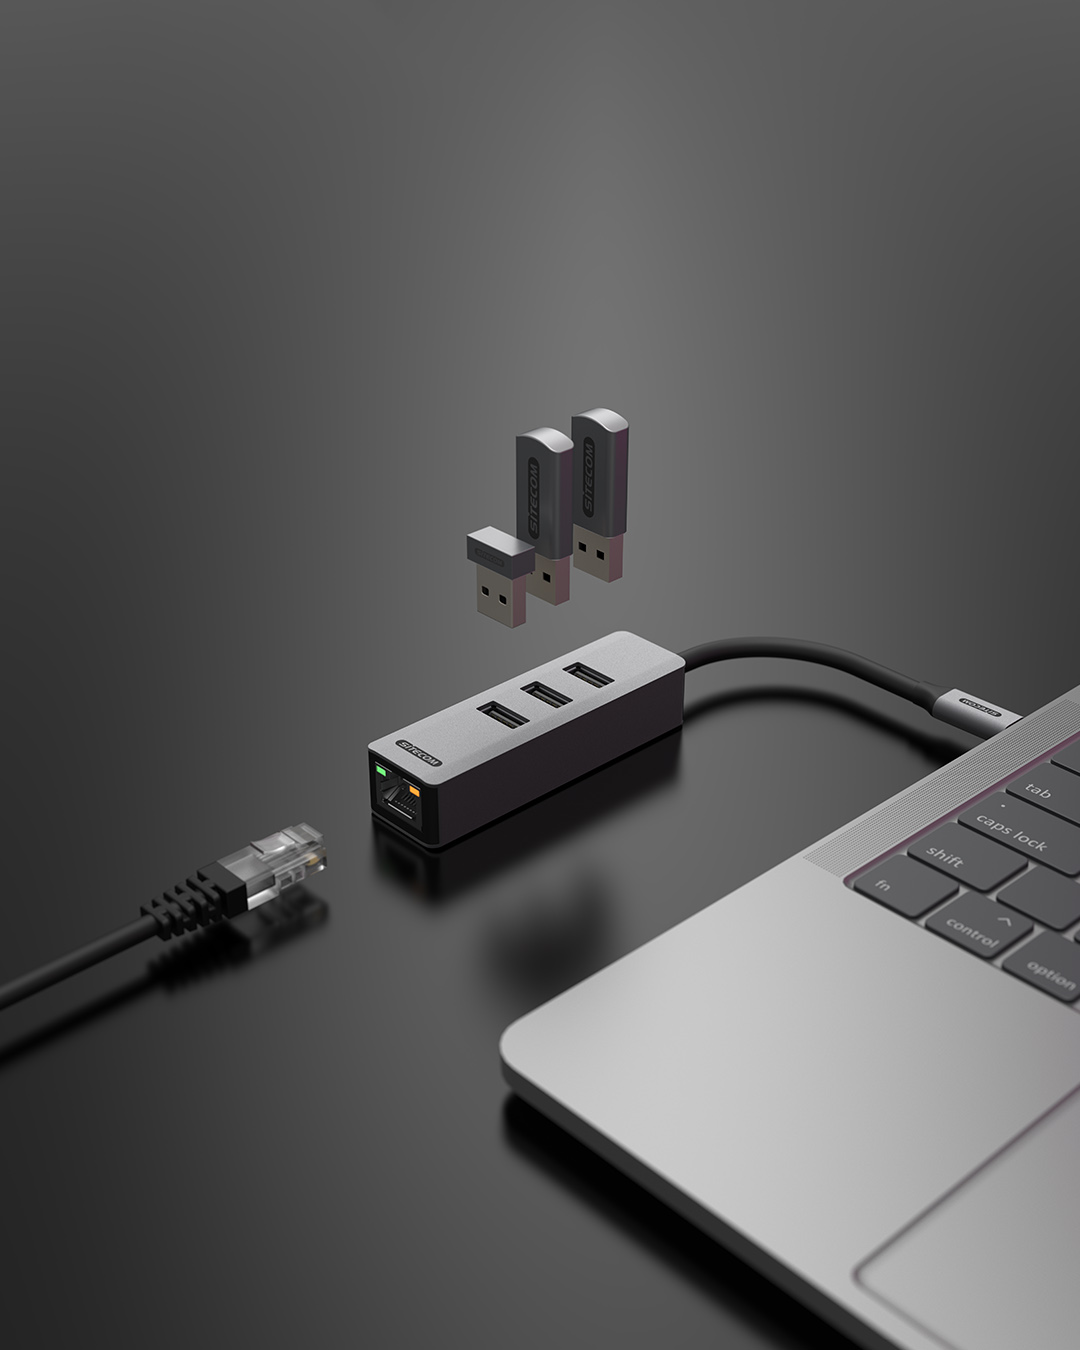 Sitecom - USB-C to Ethernet + 3x USB hub - AD-1008